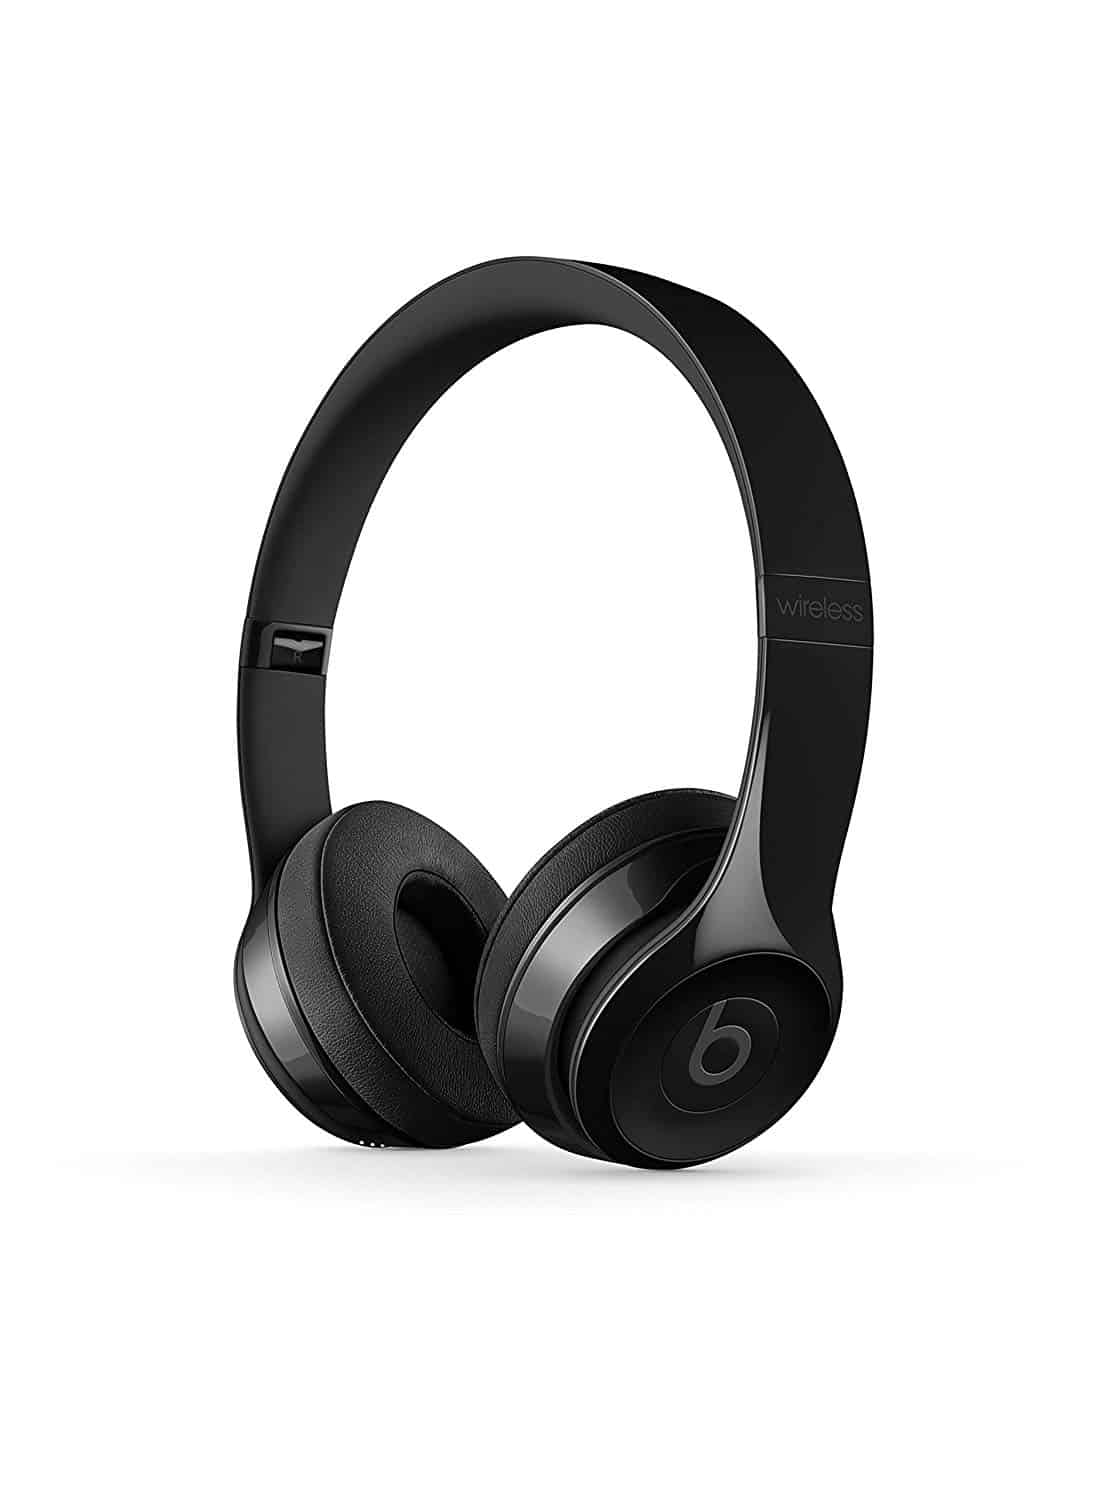 Grab Beats Solo3 Wireless Headphones just $149.99 Today!